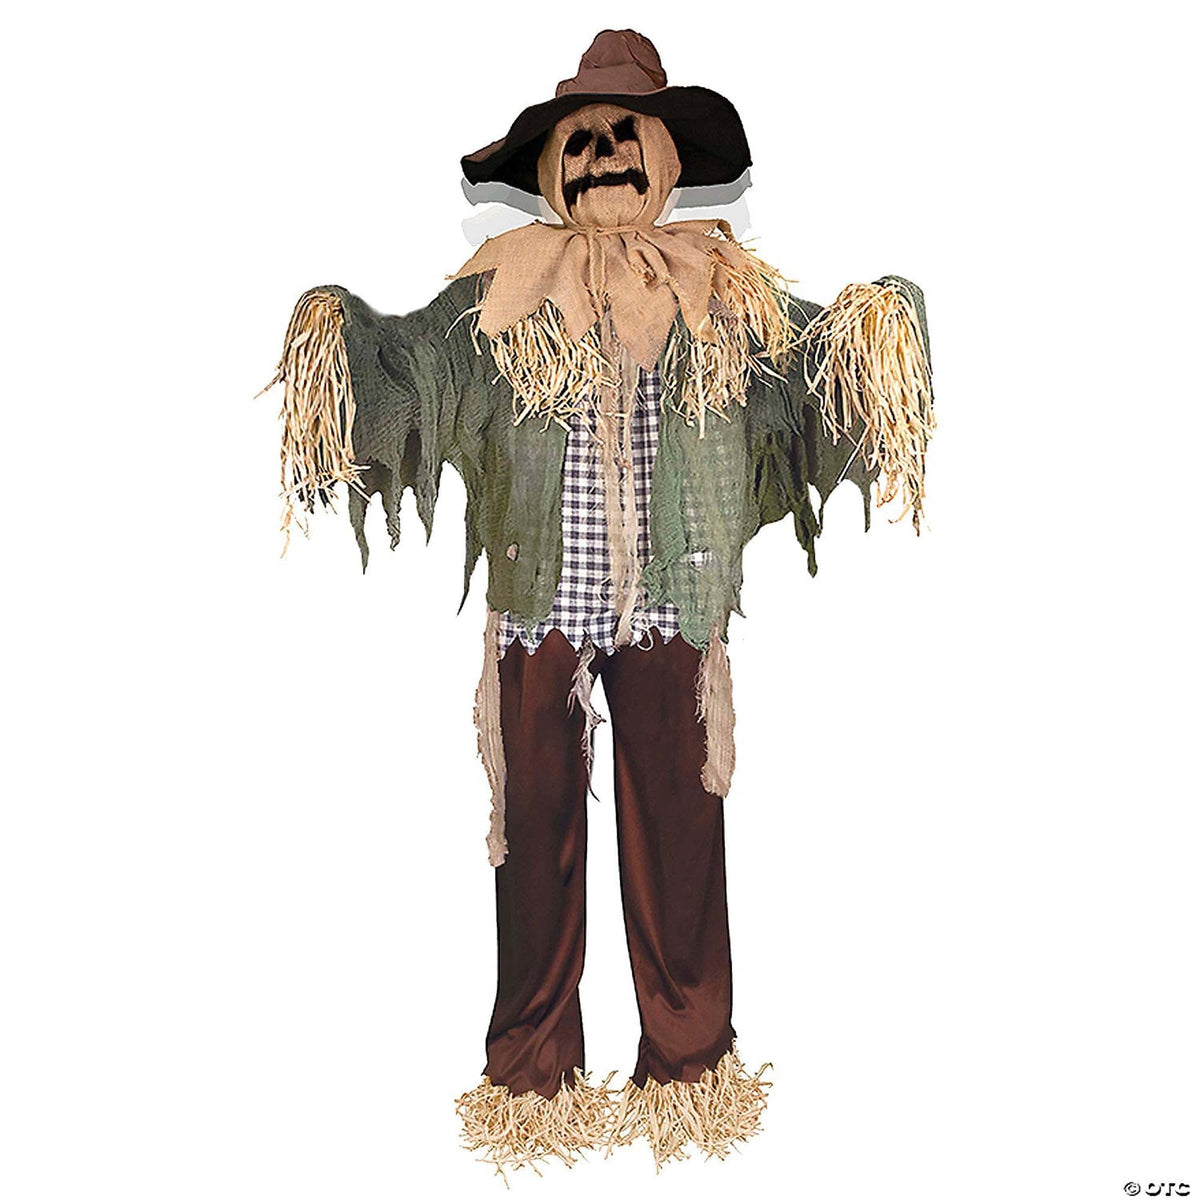 MORRIS COSTUMES Halloween Standing Surprise Scarecrow Animatronic, 1 Count